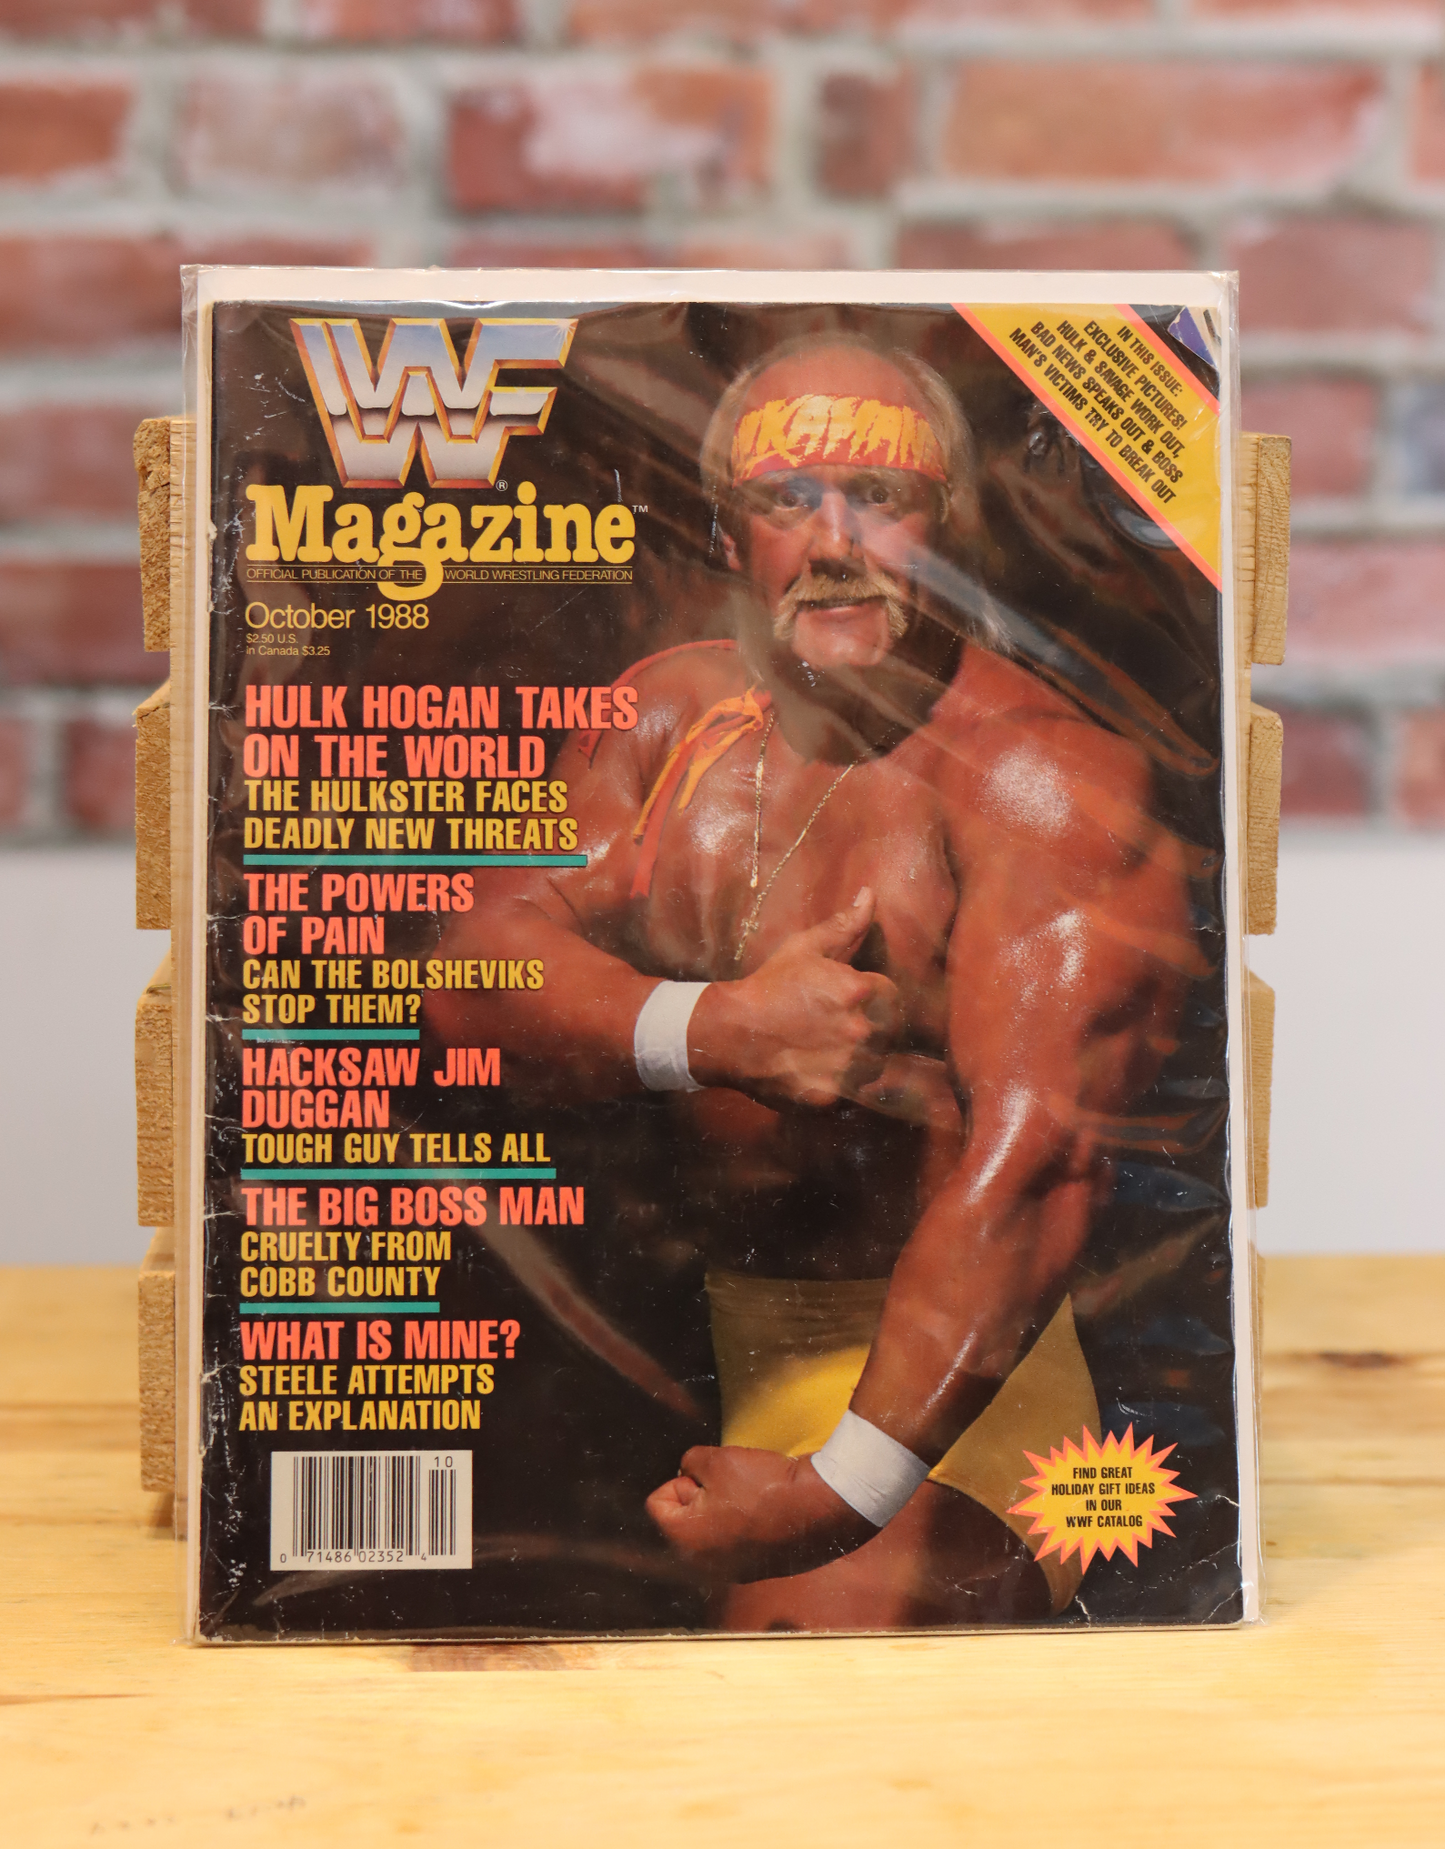 Original WWF WWE Vintage Wrestling Magazine Hulk Hogan (October 1988)